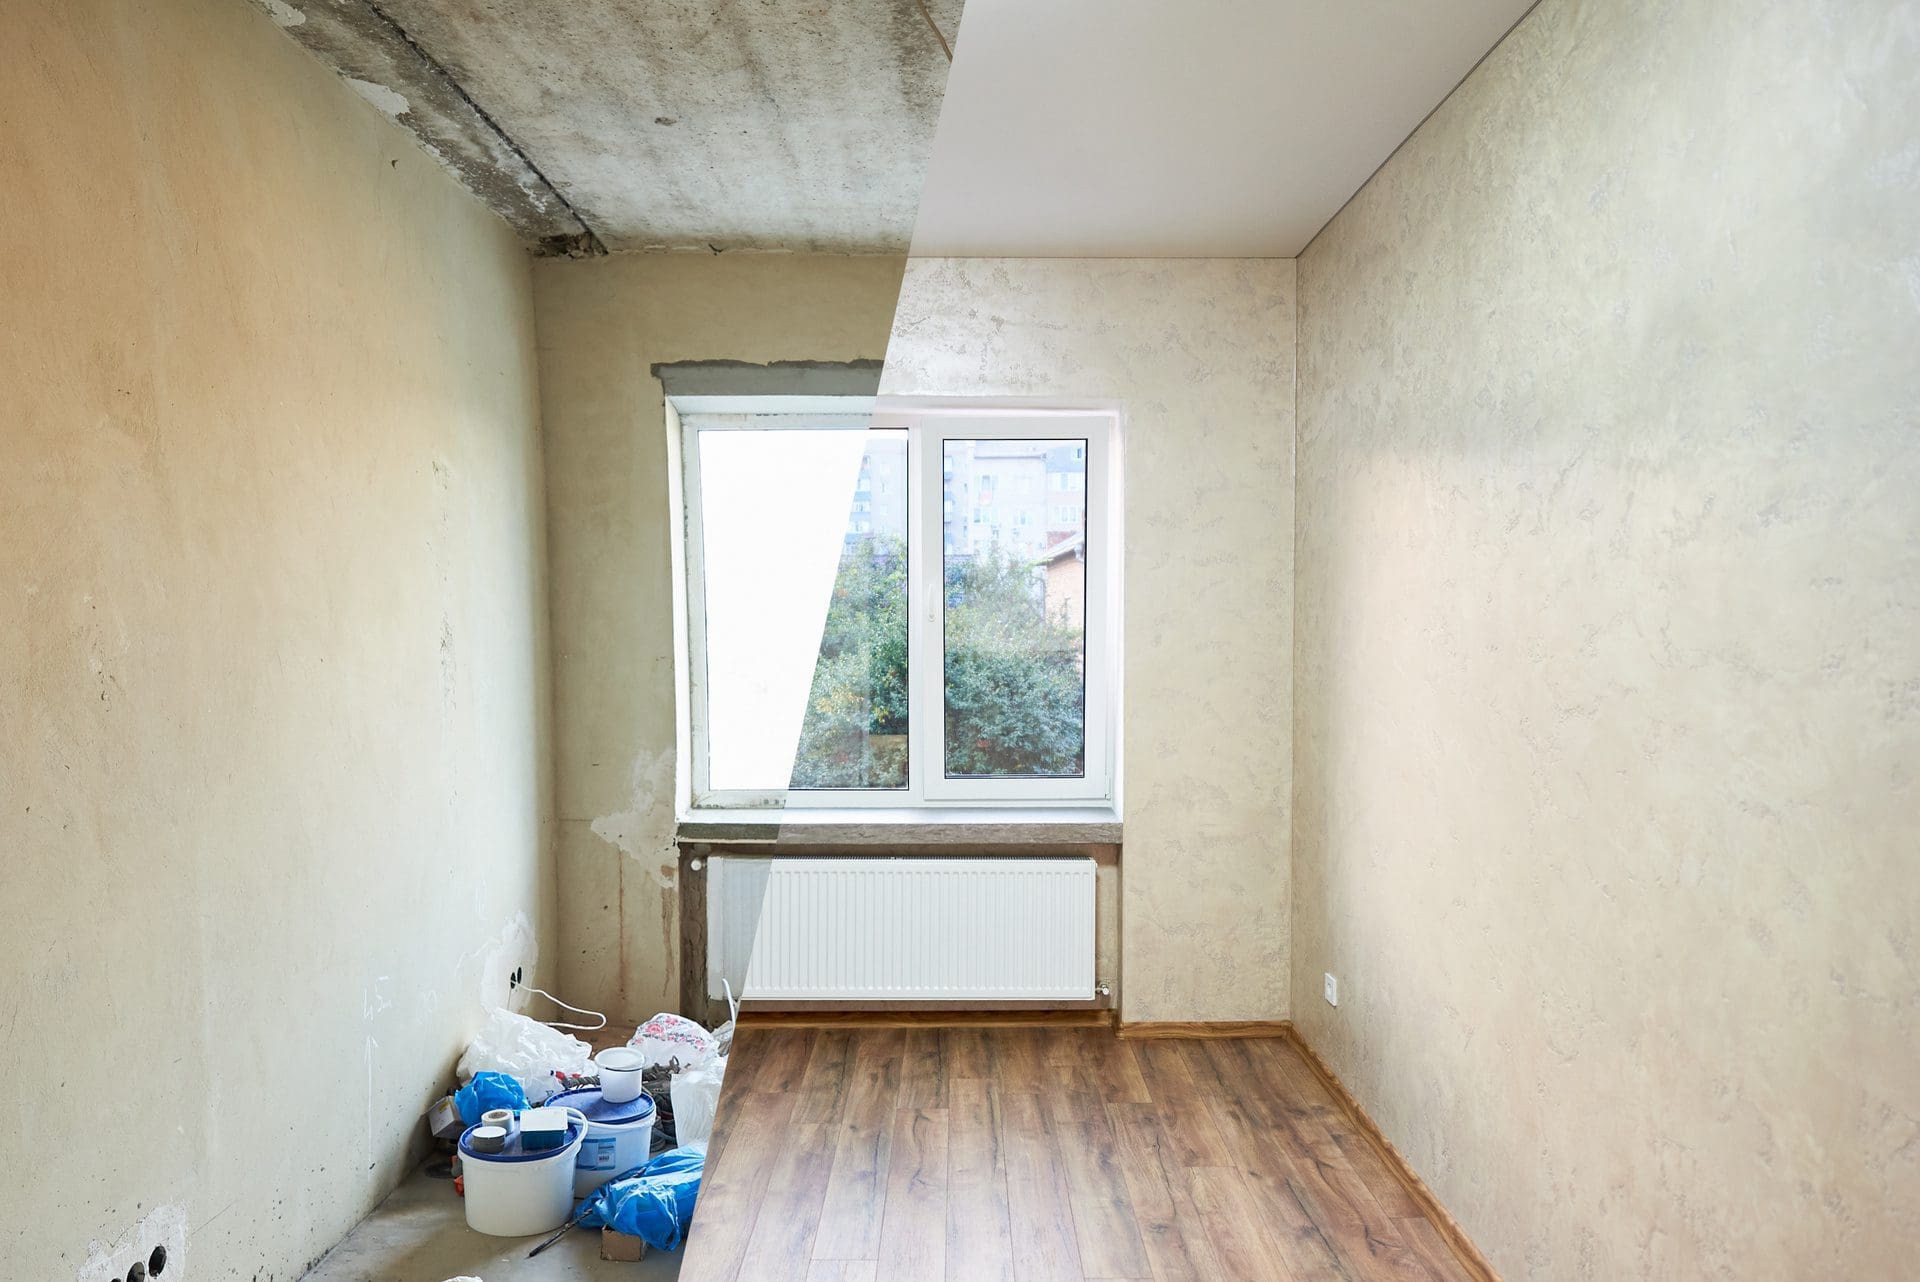 Wohnung renoviert: Vorher / nachher (© anatoliy_gleb / stock.adobe.com)